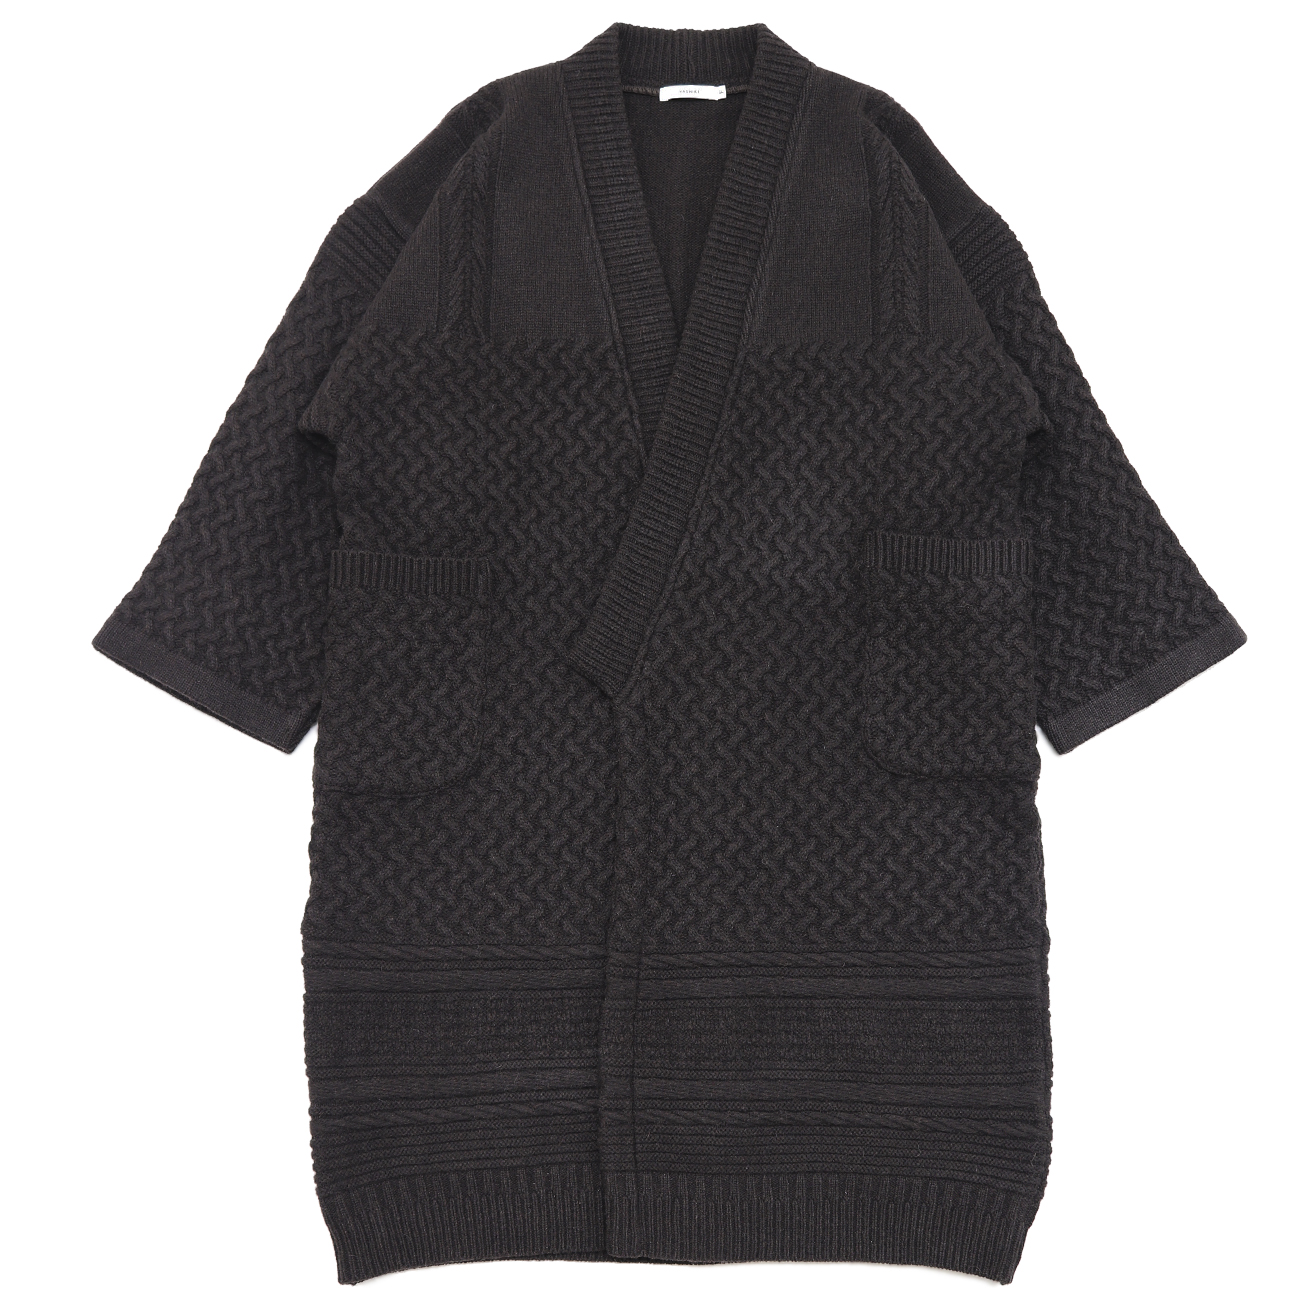 YASHIKI Tsukimi Knit Coat(BROWN)